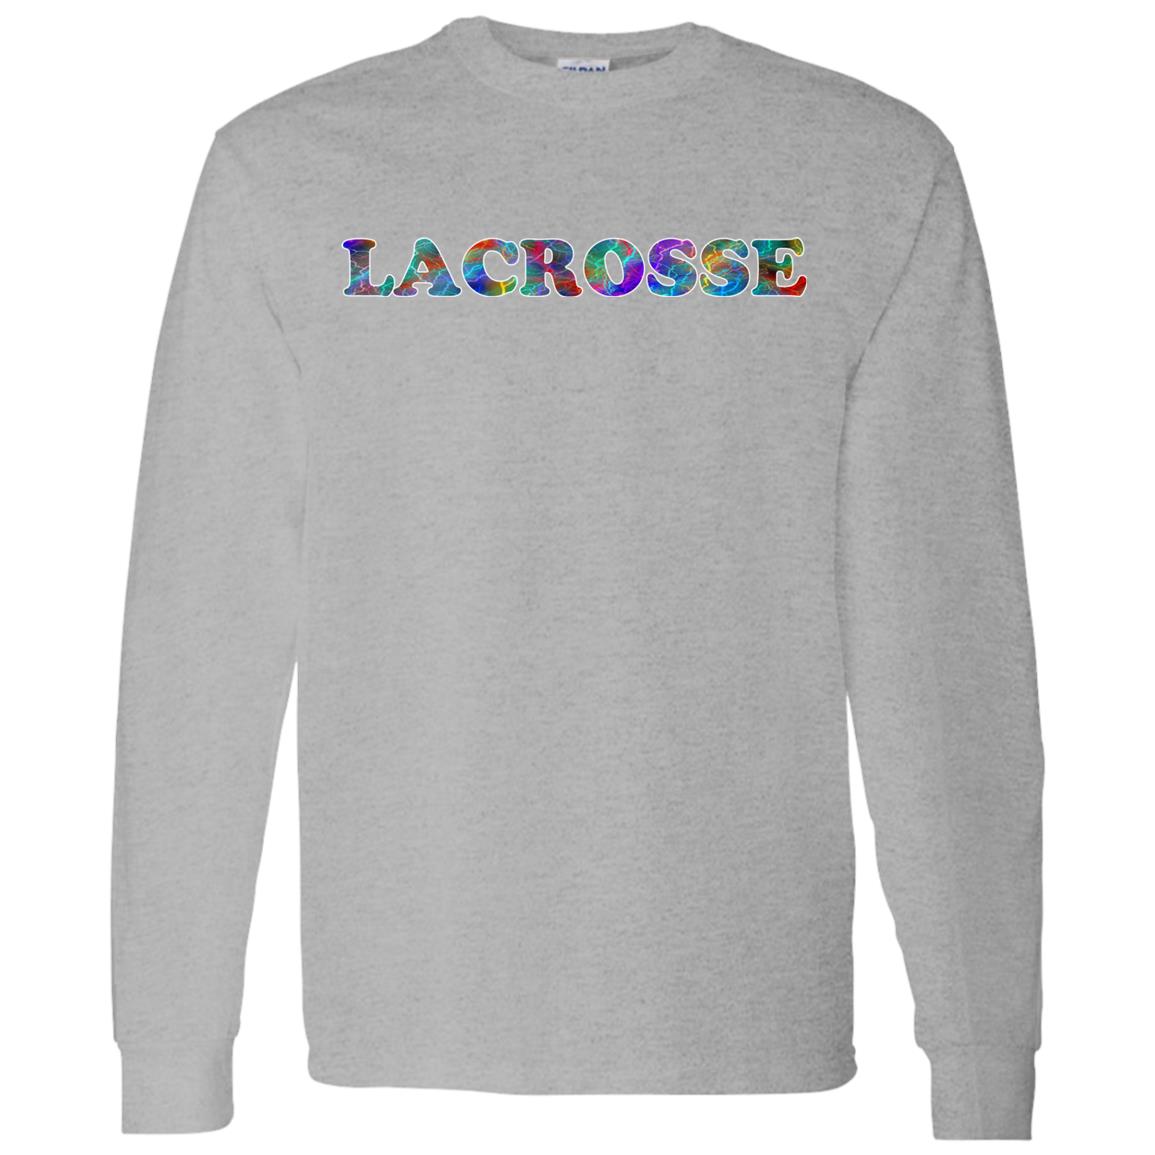 Lacrosse Long Sleeve T-Shirt